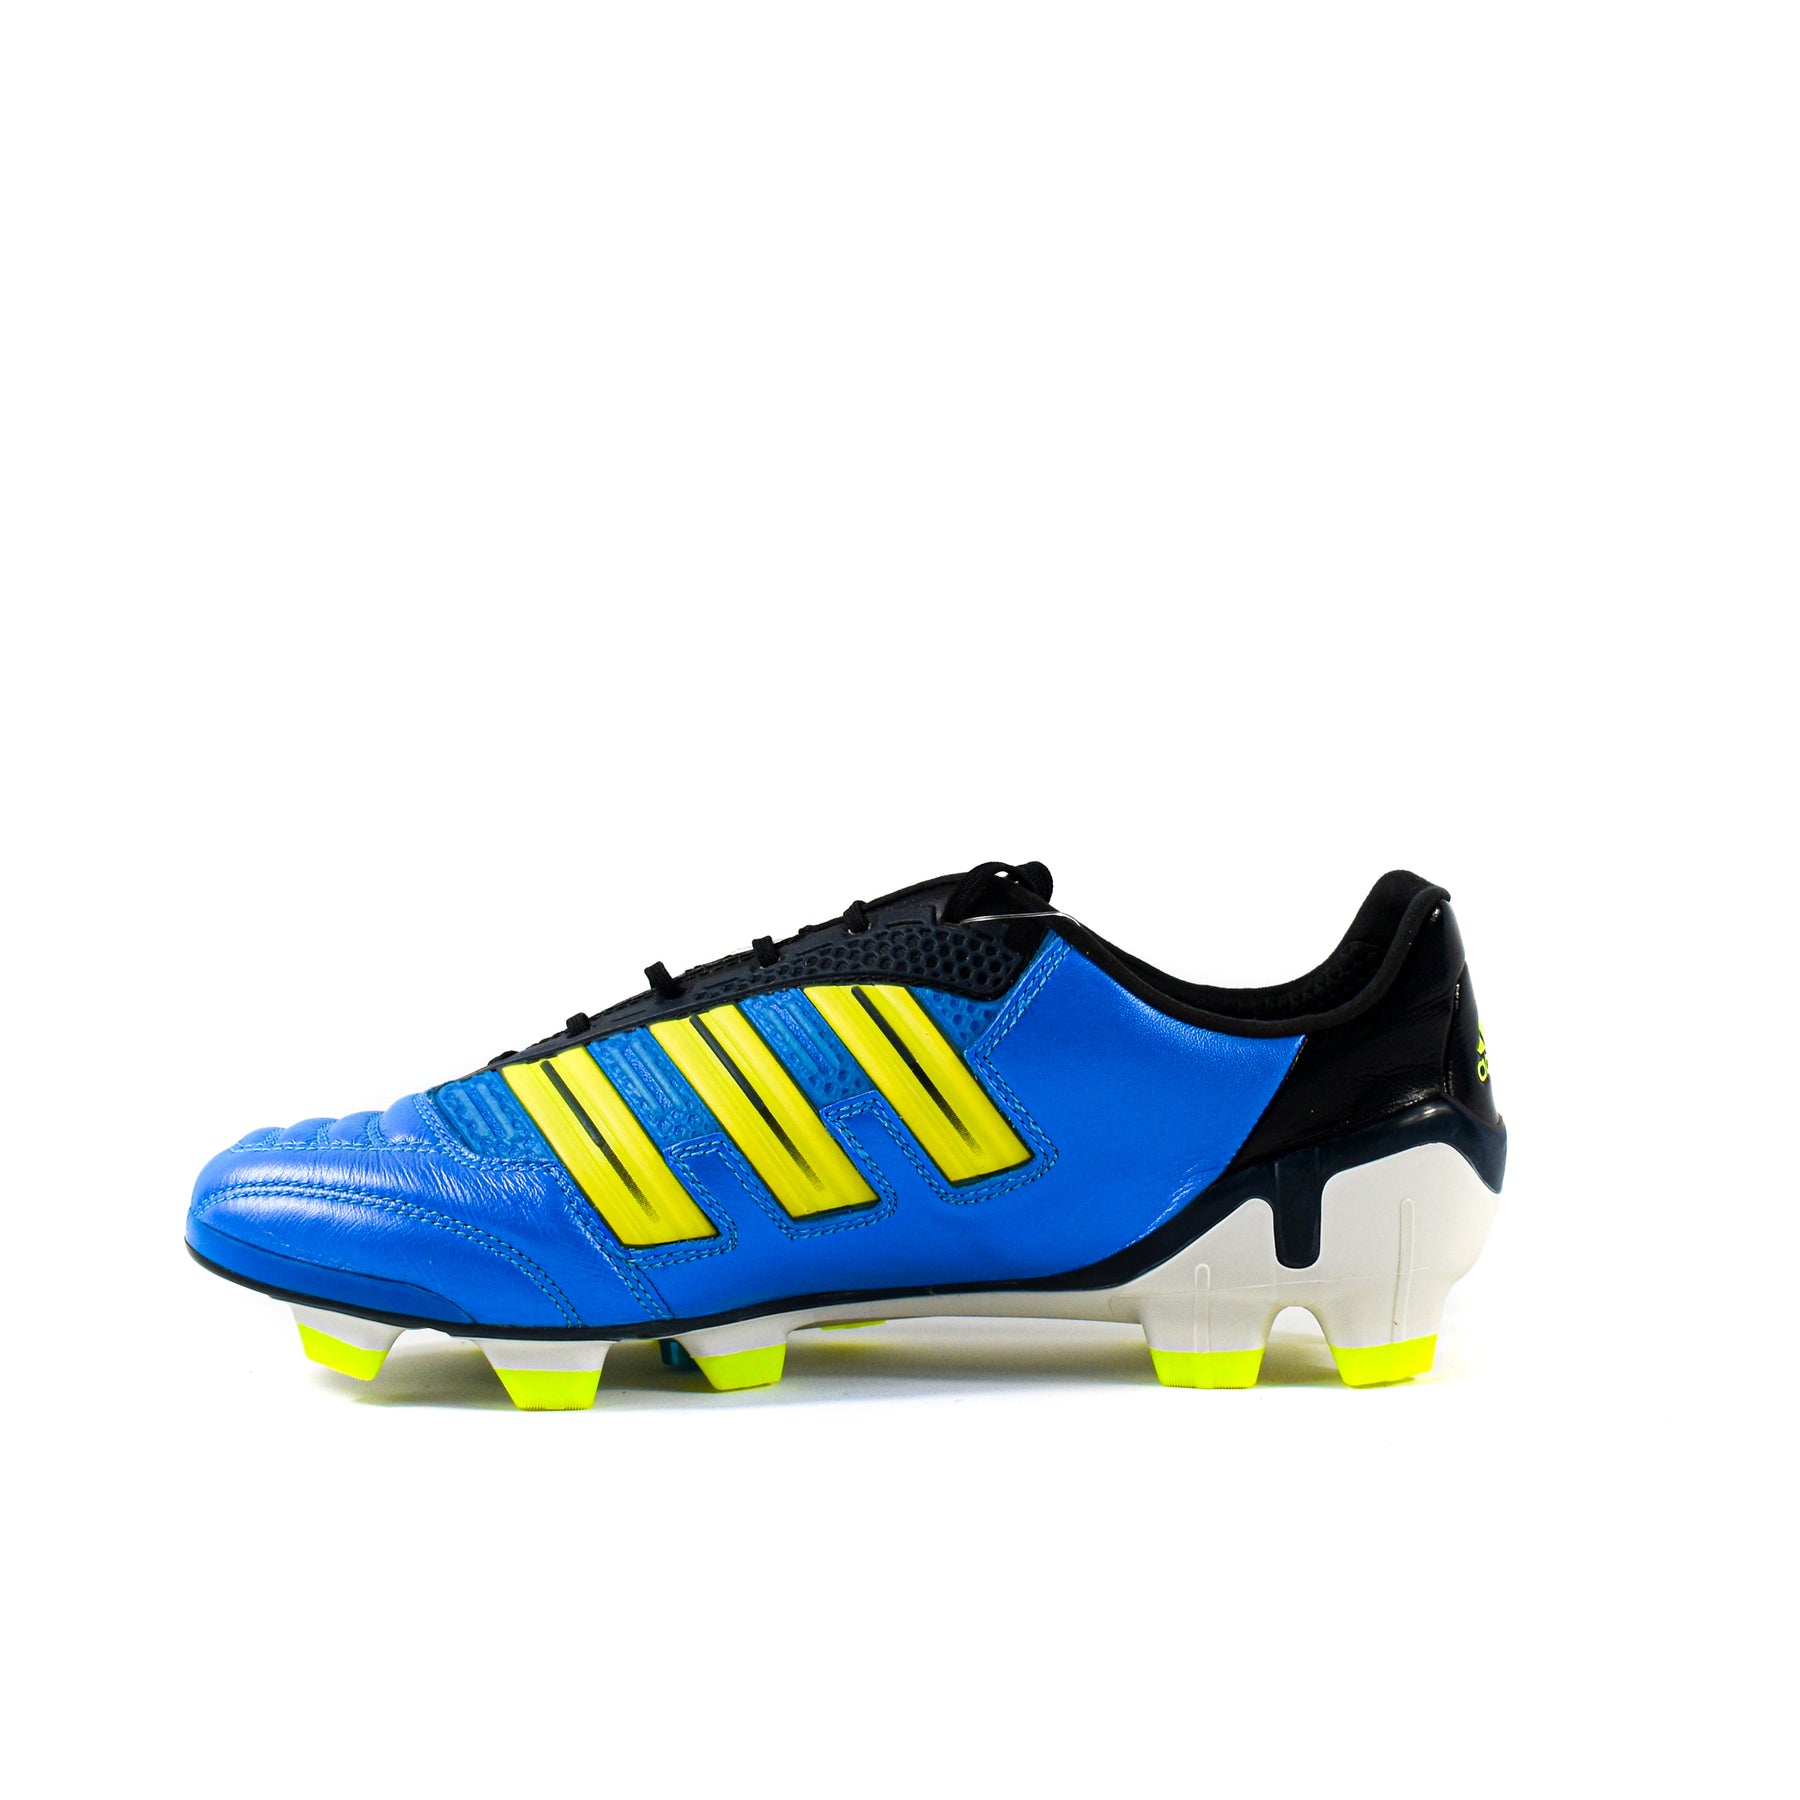 Adidas Predator Adipower FG Blue – Classic Soccer